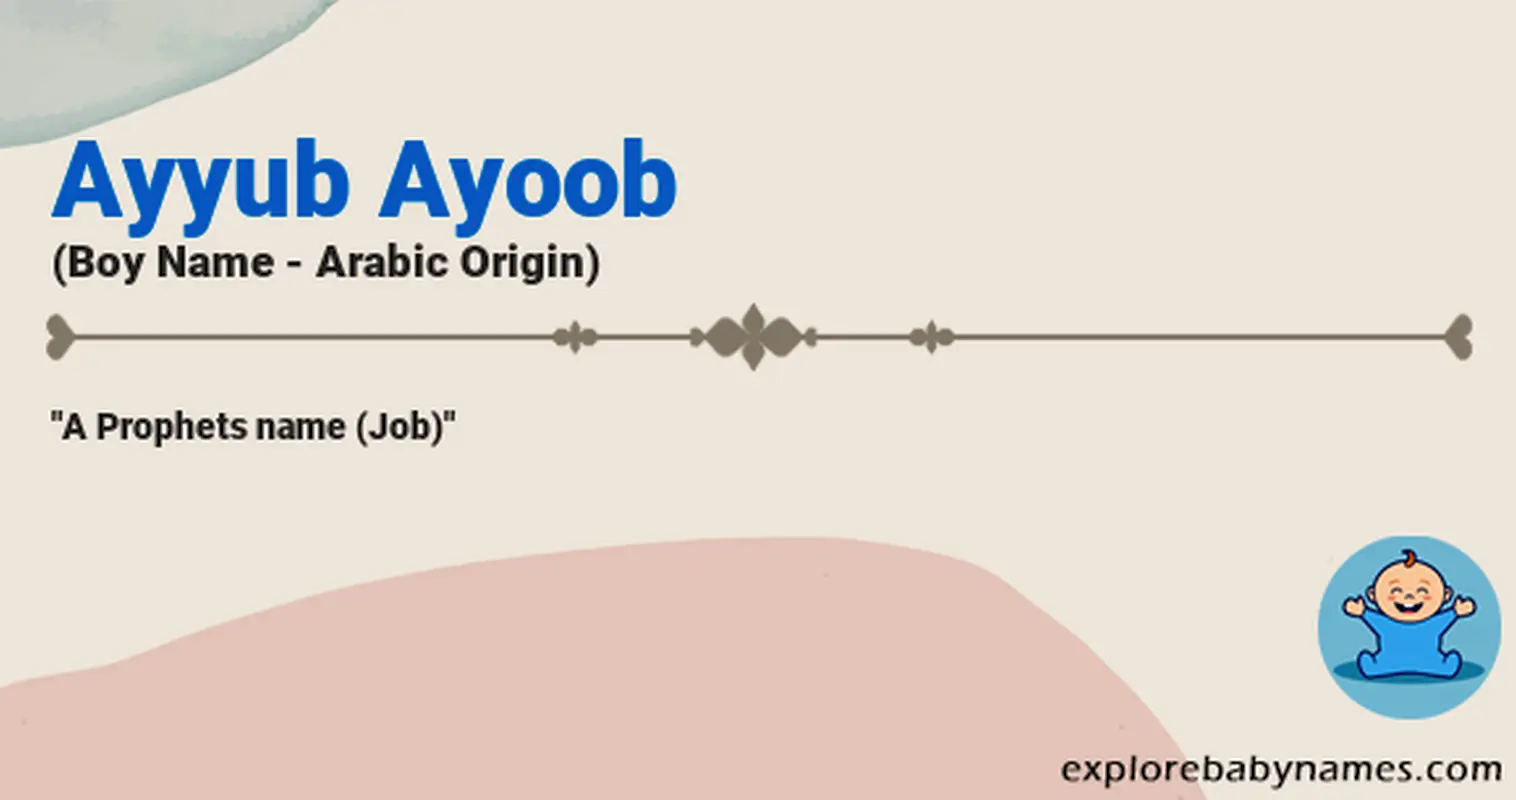 Meaning of Ayyub Ayoob